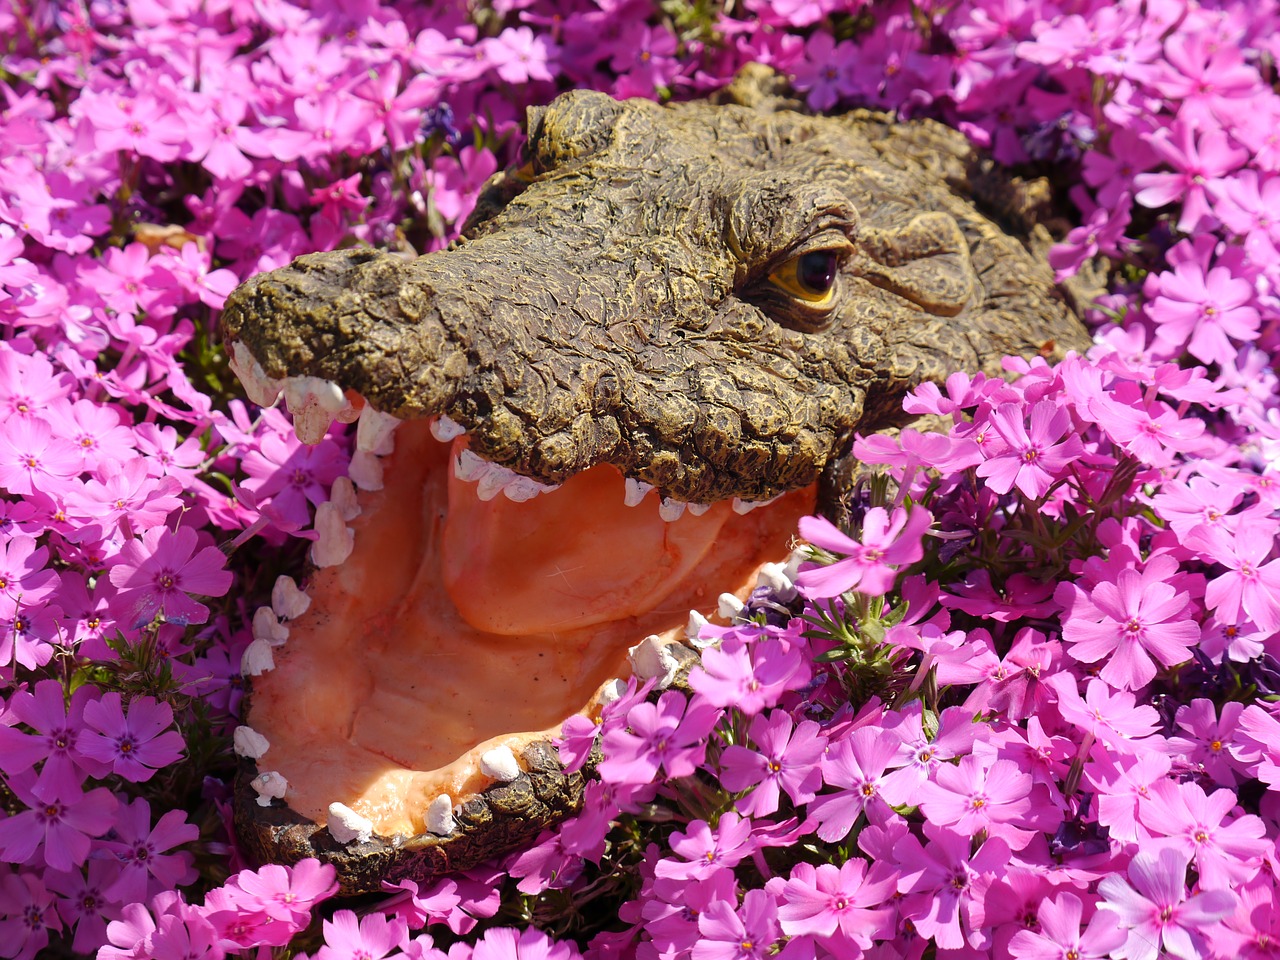 Image - crocodile flowers colorful garden